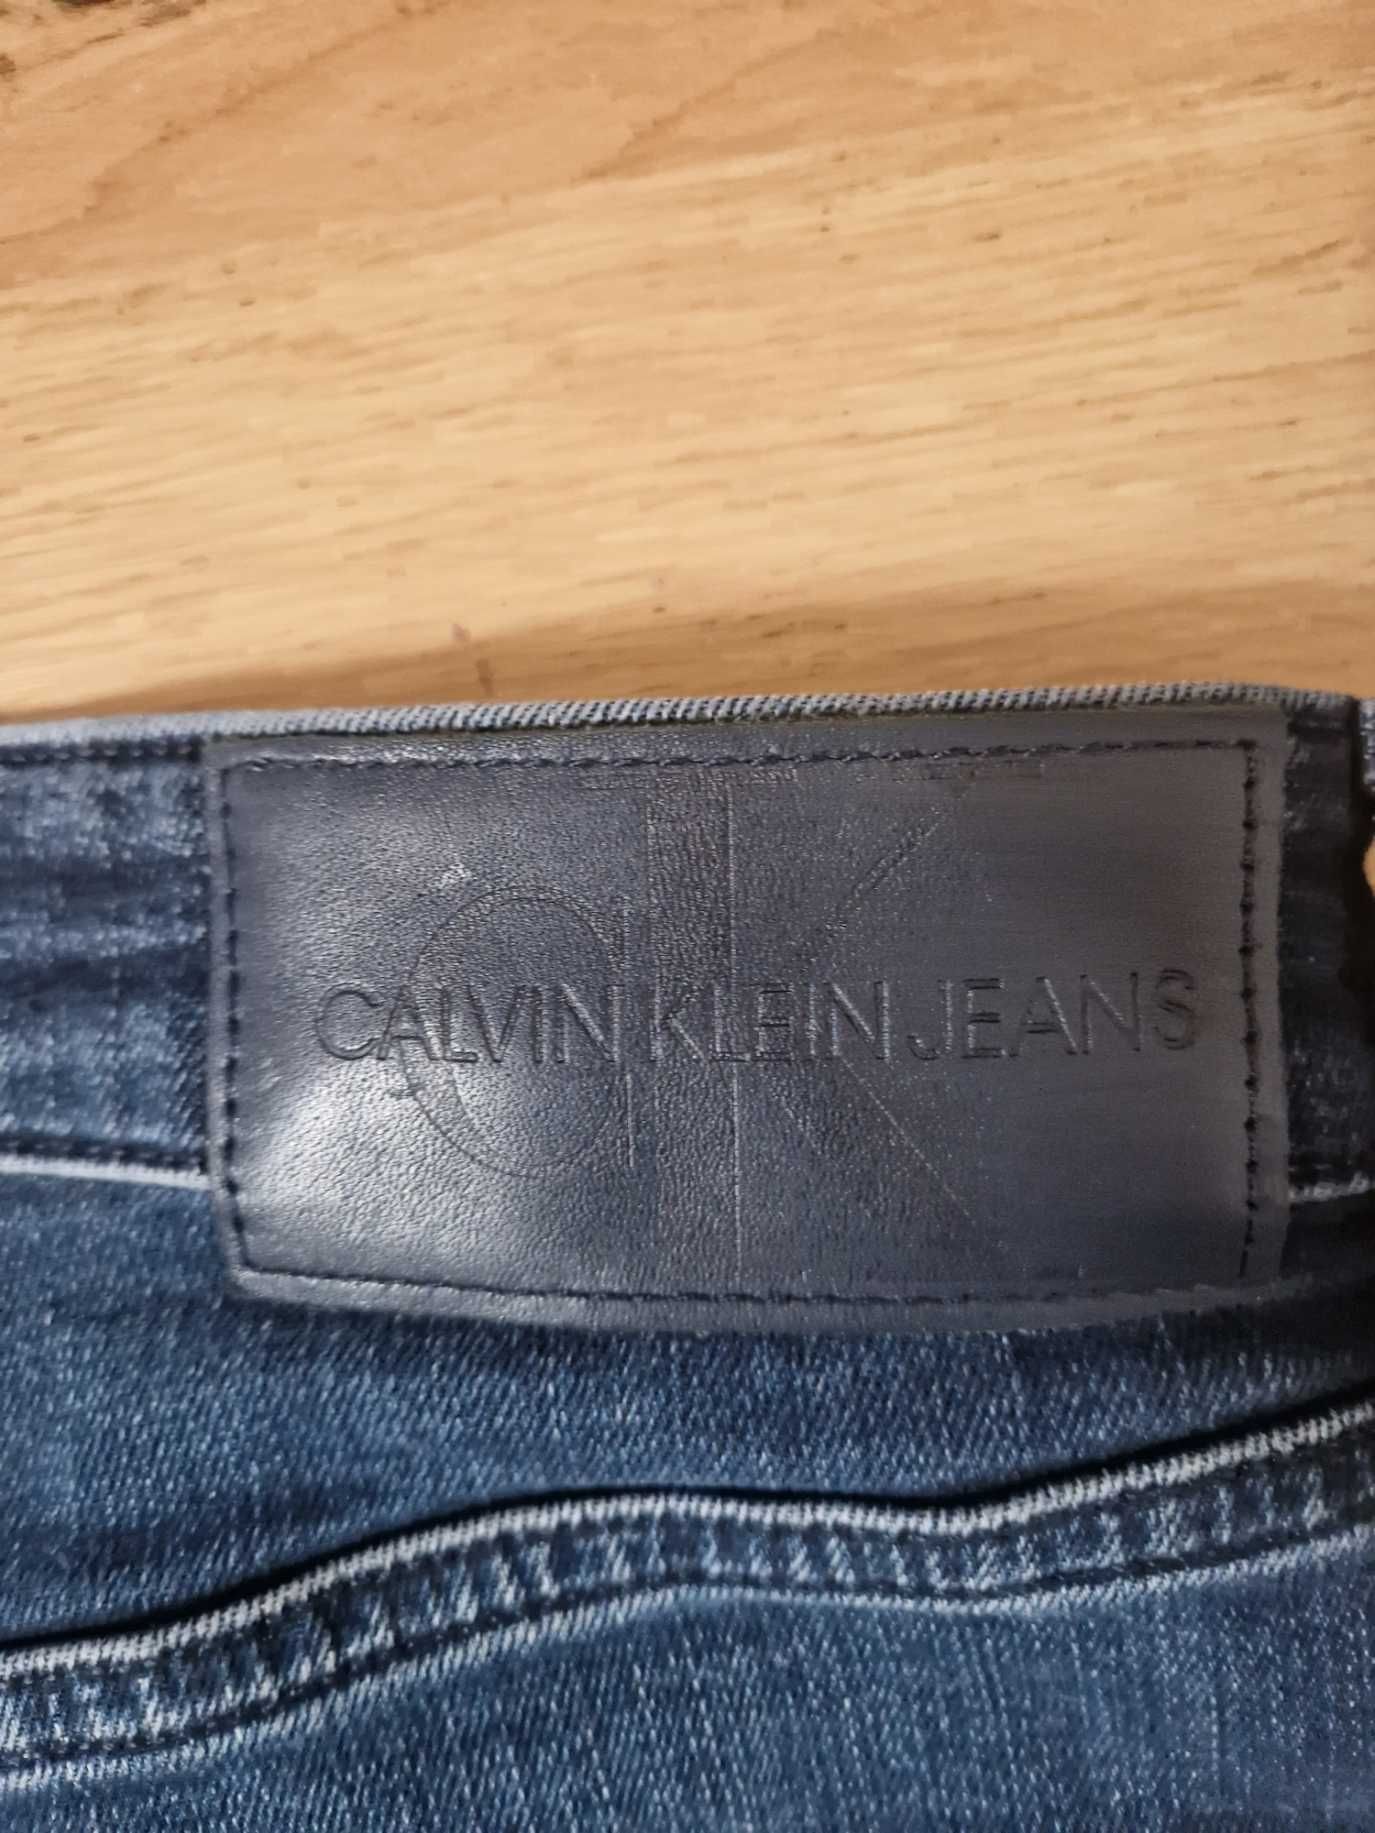 Spodnie Calvin Klein jeans granatowe, oryginalne